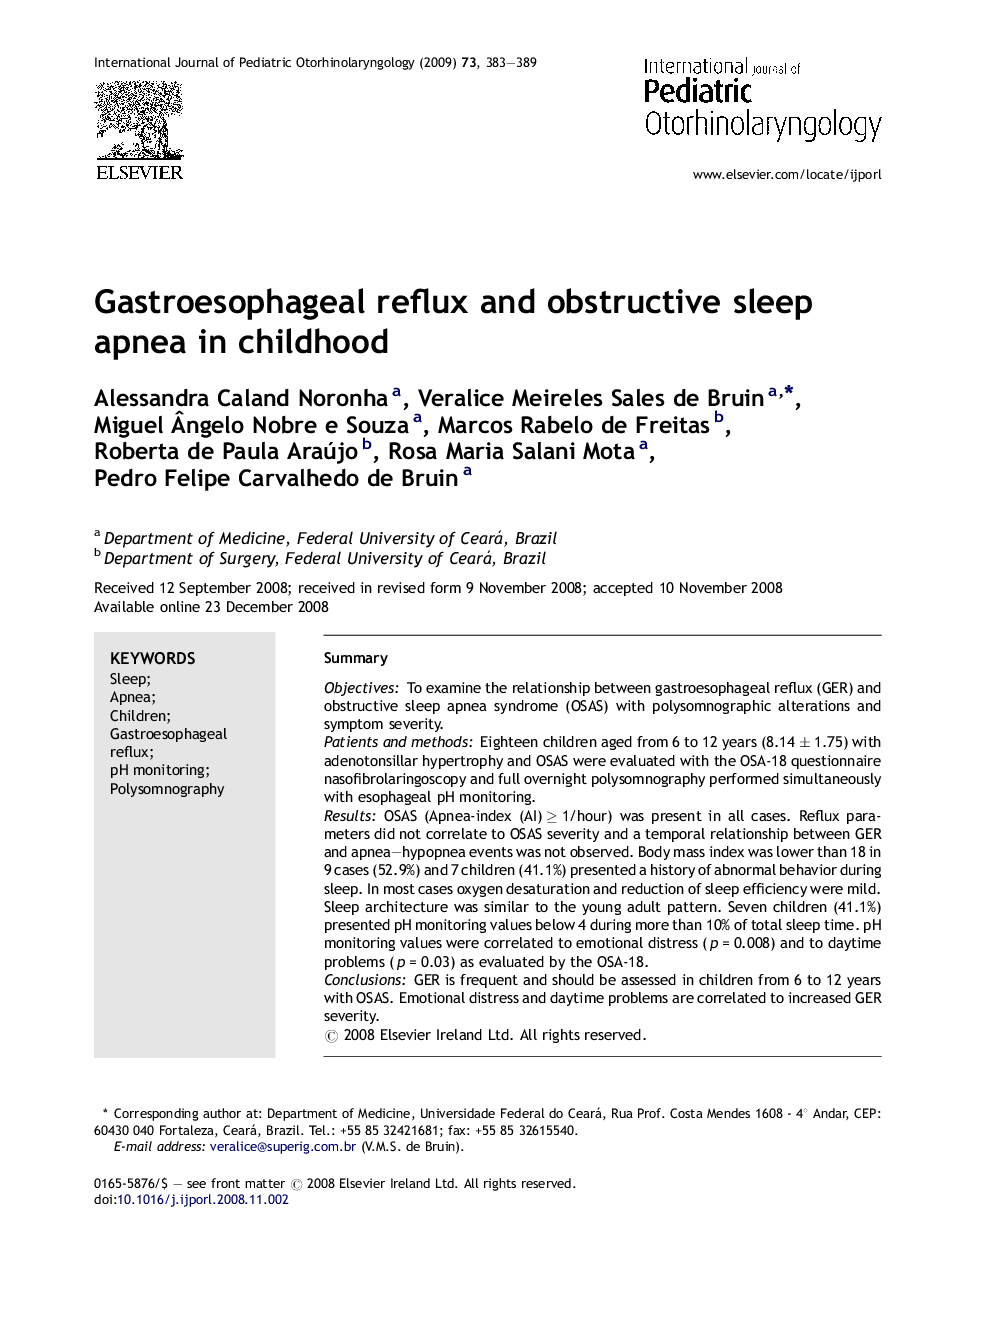 Gastroesophageal reflux and obstructive sleep apnea in childhood